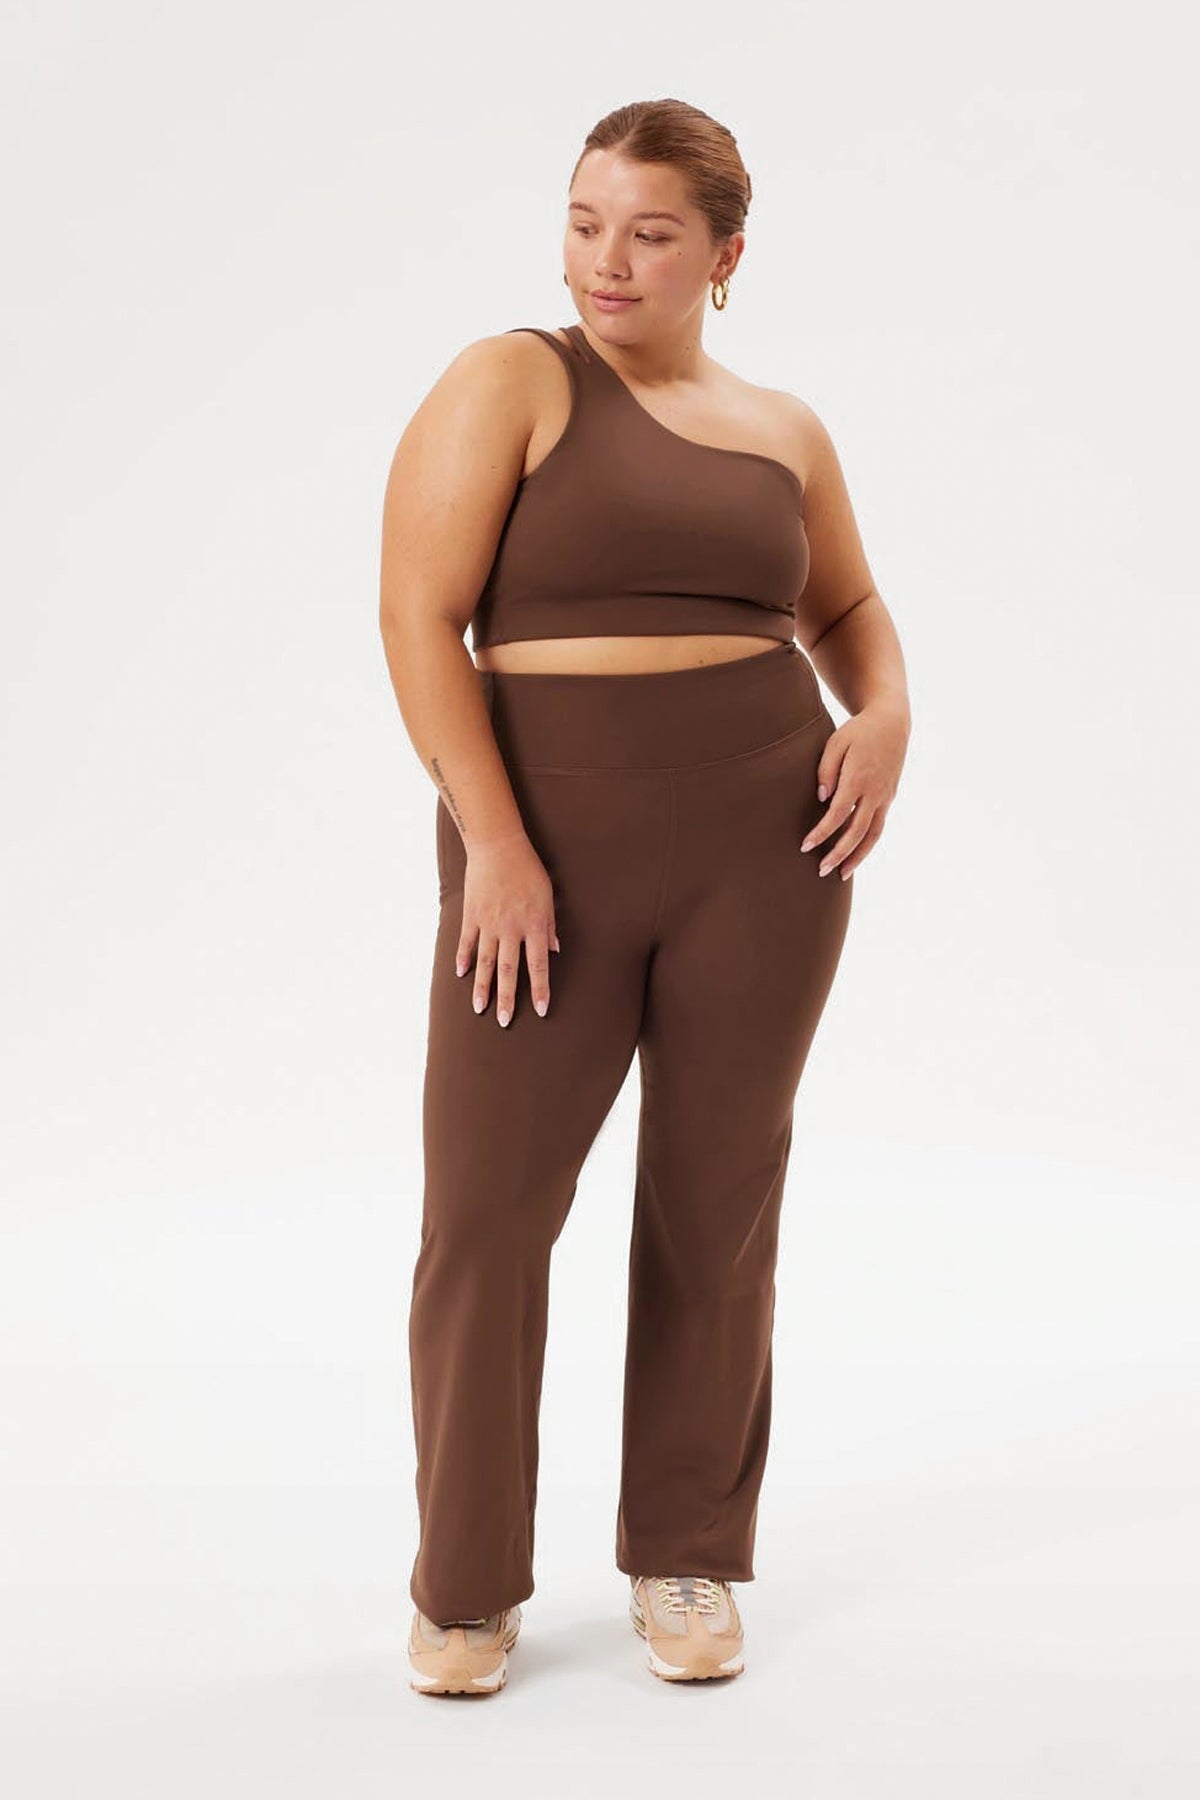 Nike Women's One Plus Size legging cropped pants RUST 3x 3xl BUTT